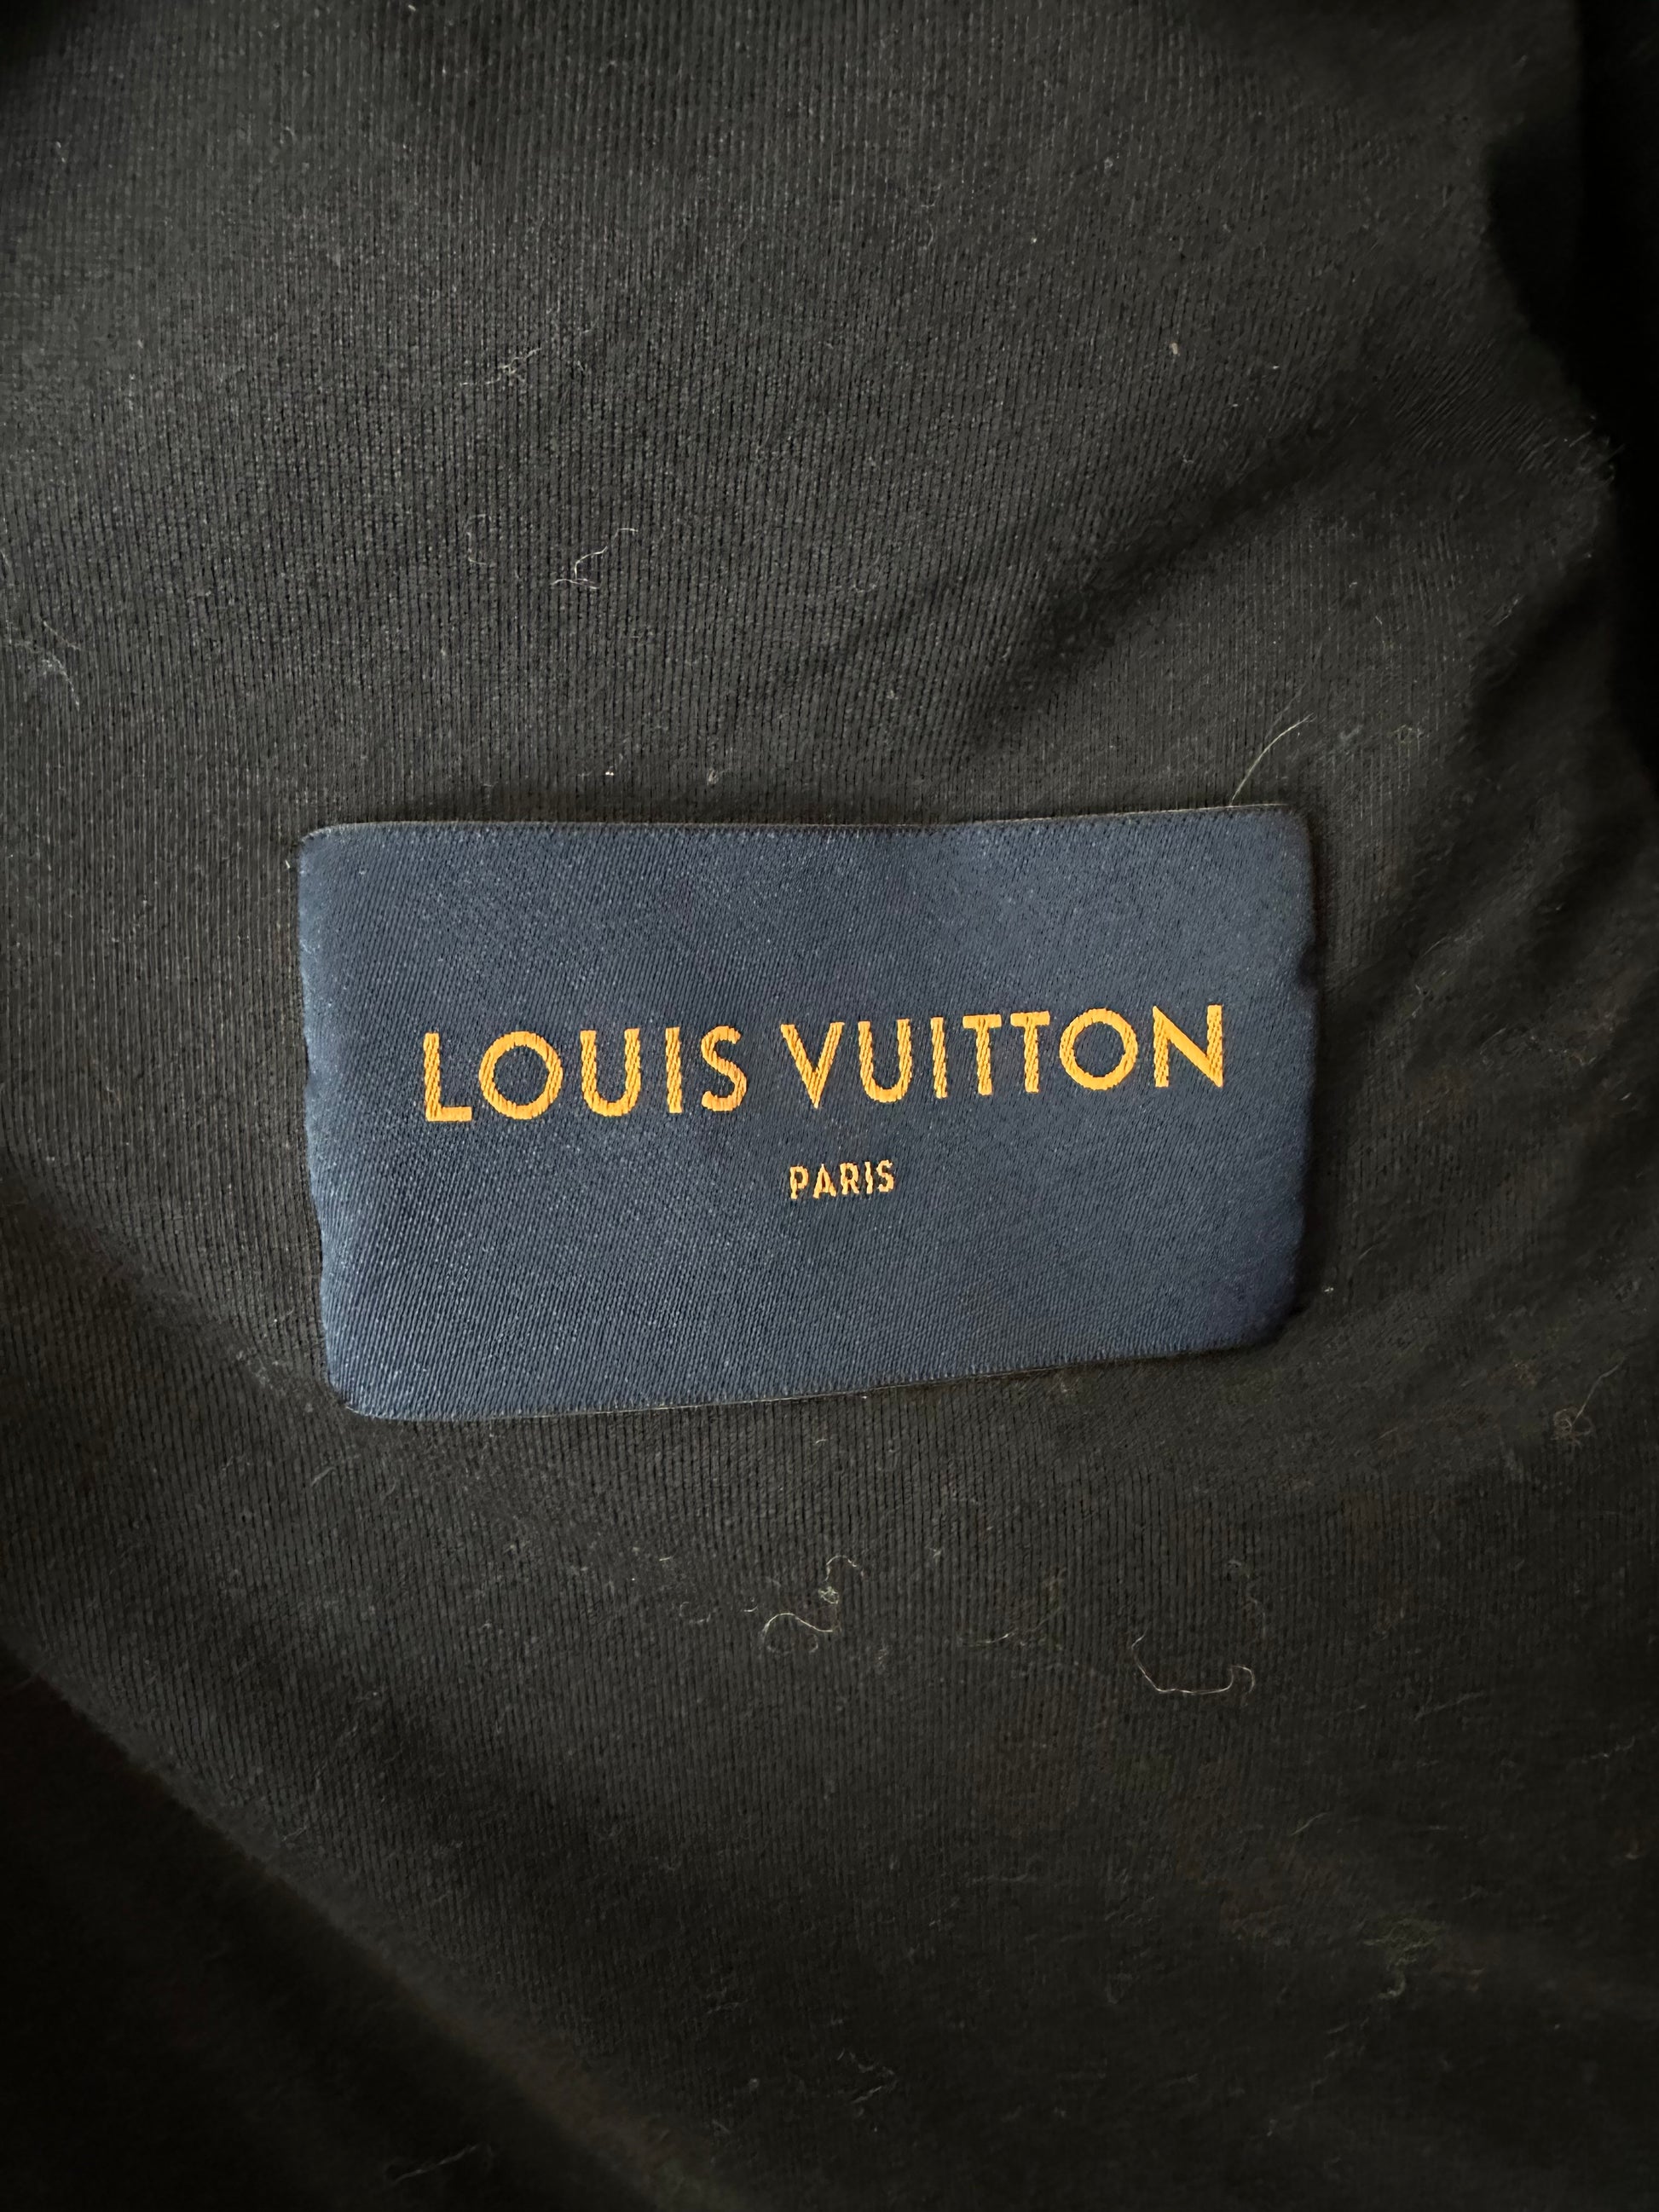 LouisVuitton MONOGRAM CAMO FLEECE BLOUSON